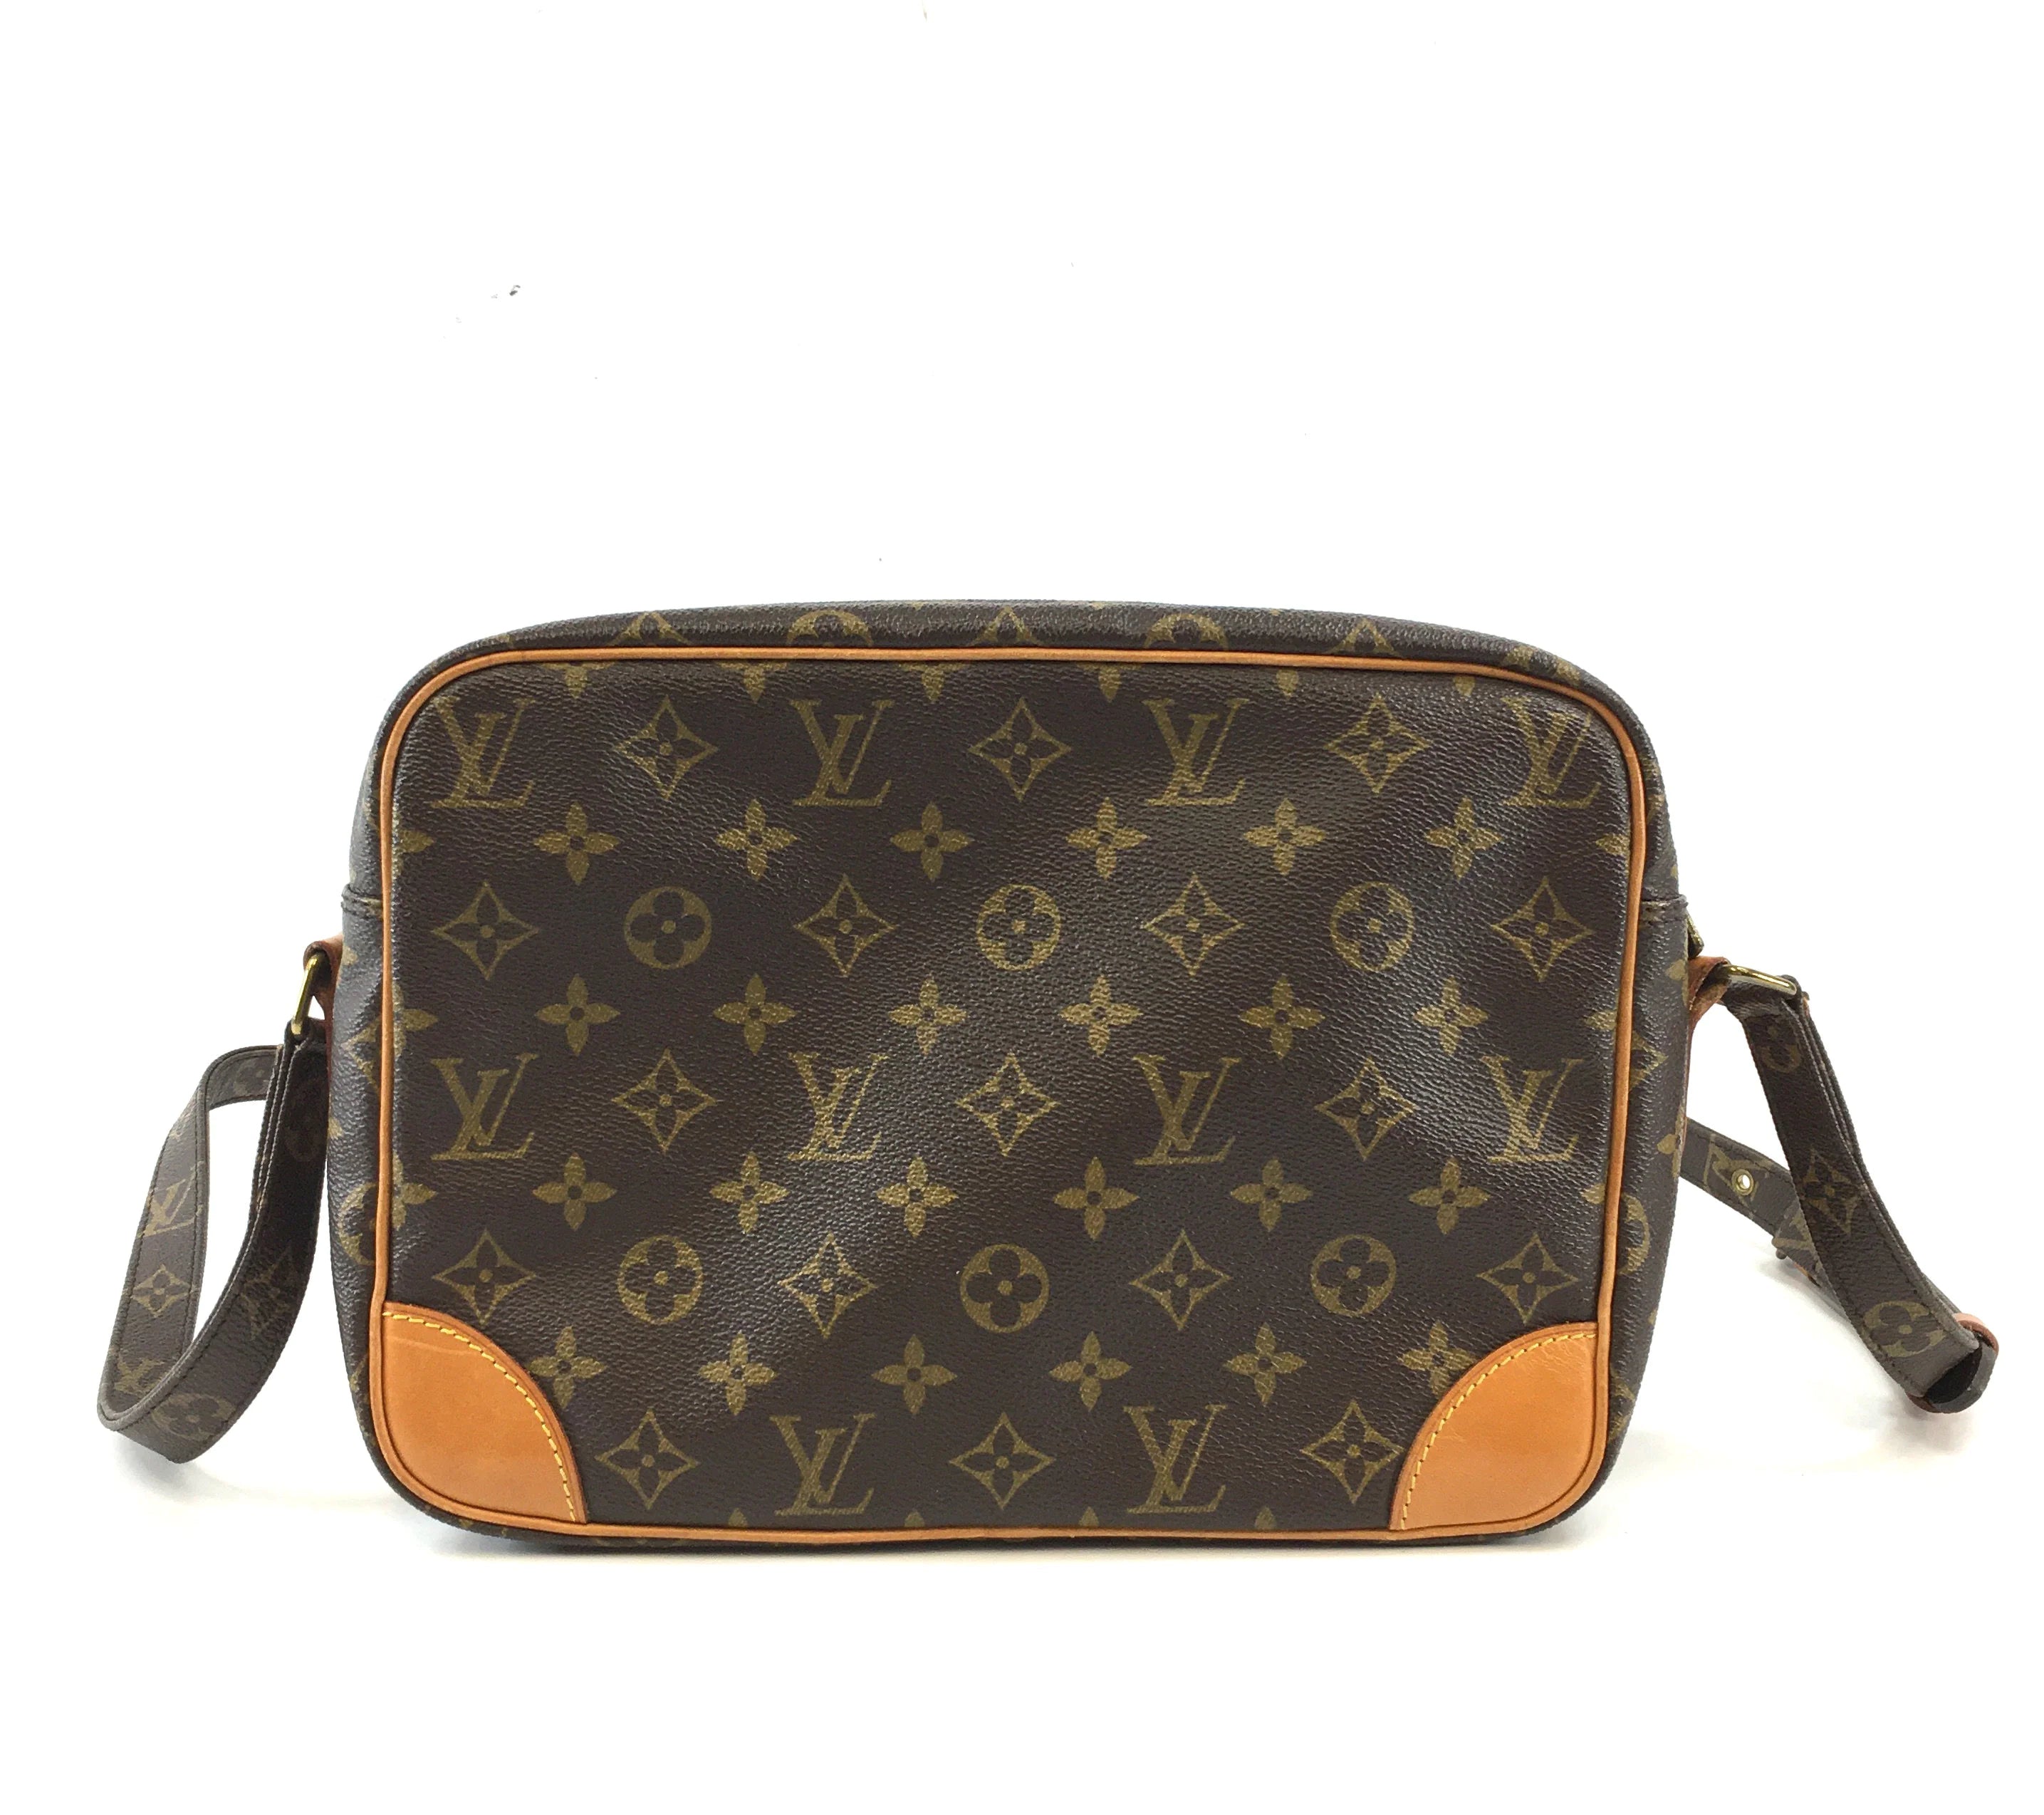 Louis Vuitton NIL 28 Handbags